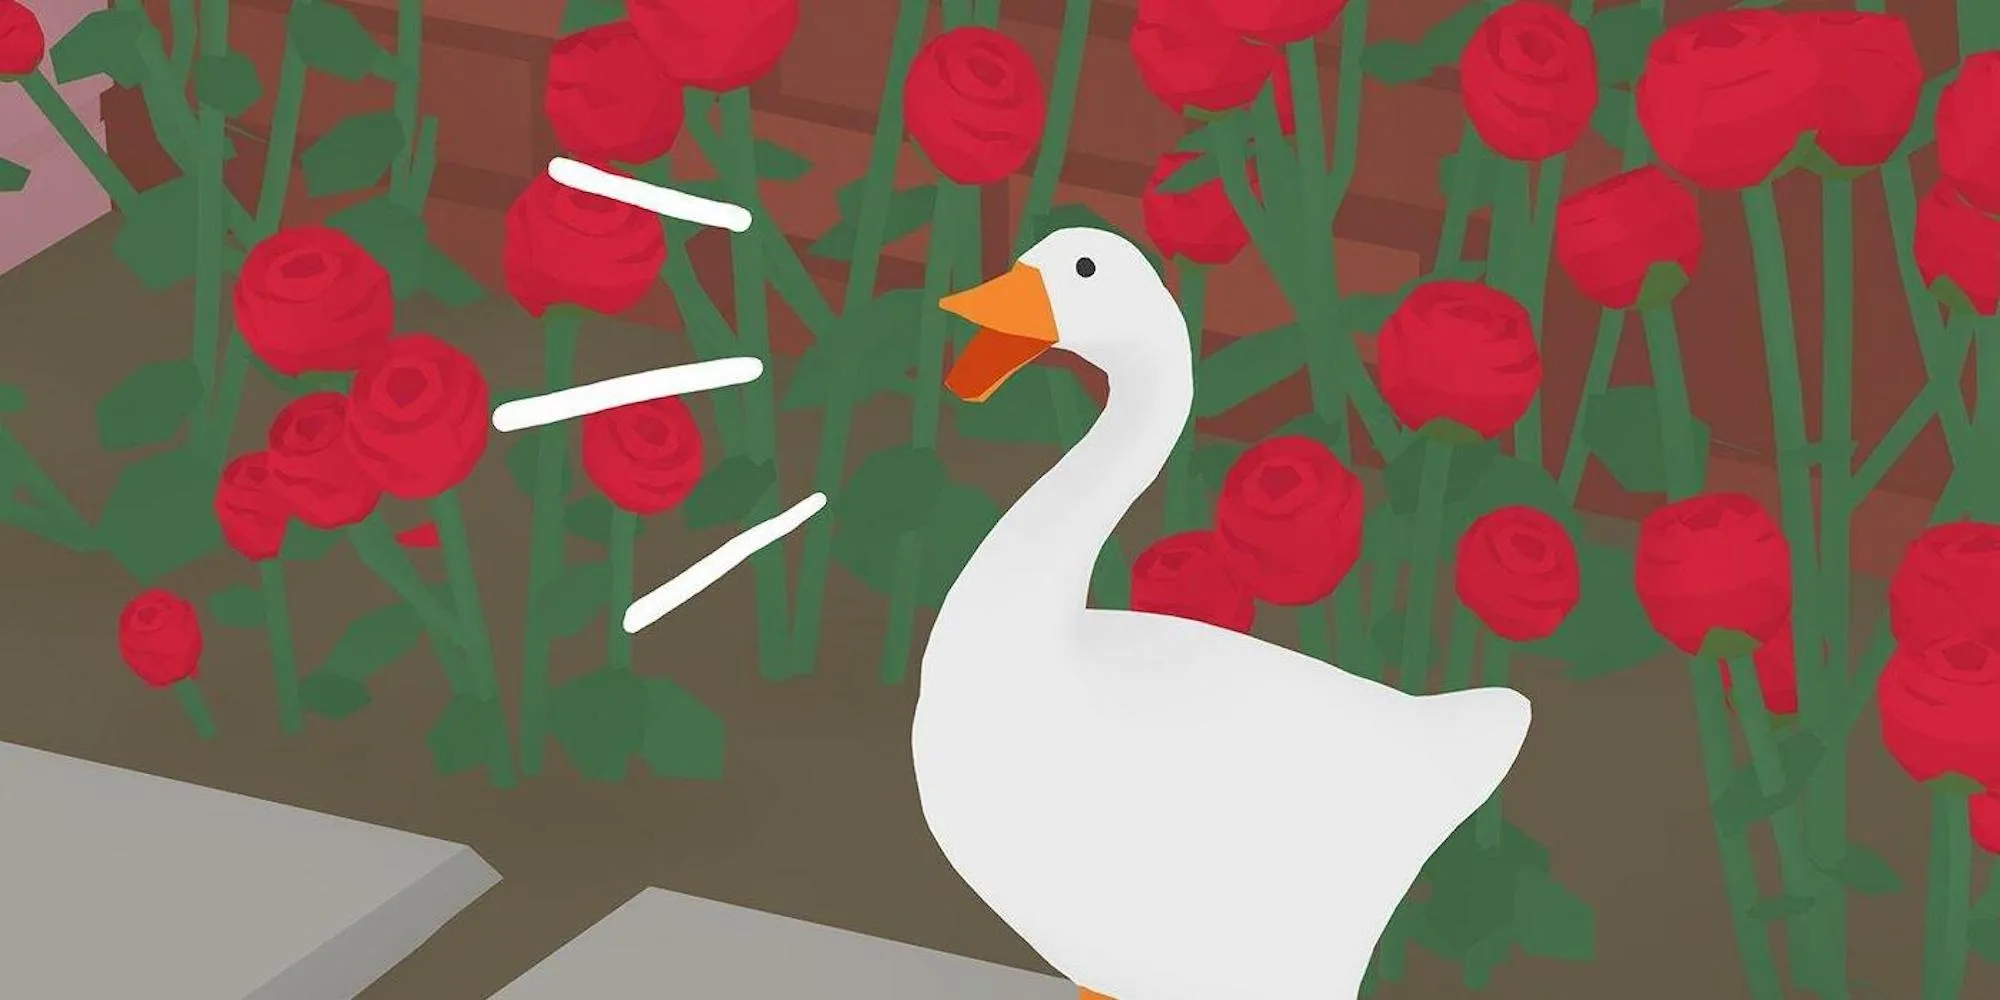 L'oca in Untitled Goose Game